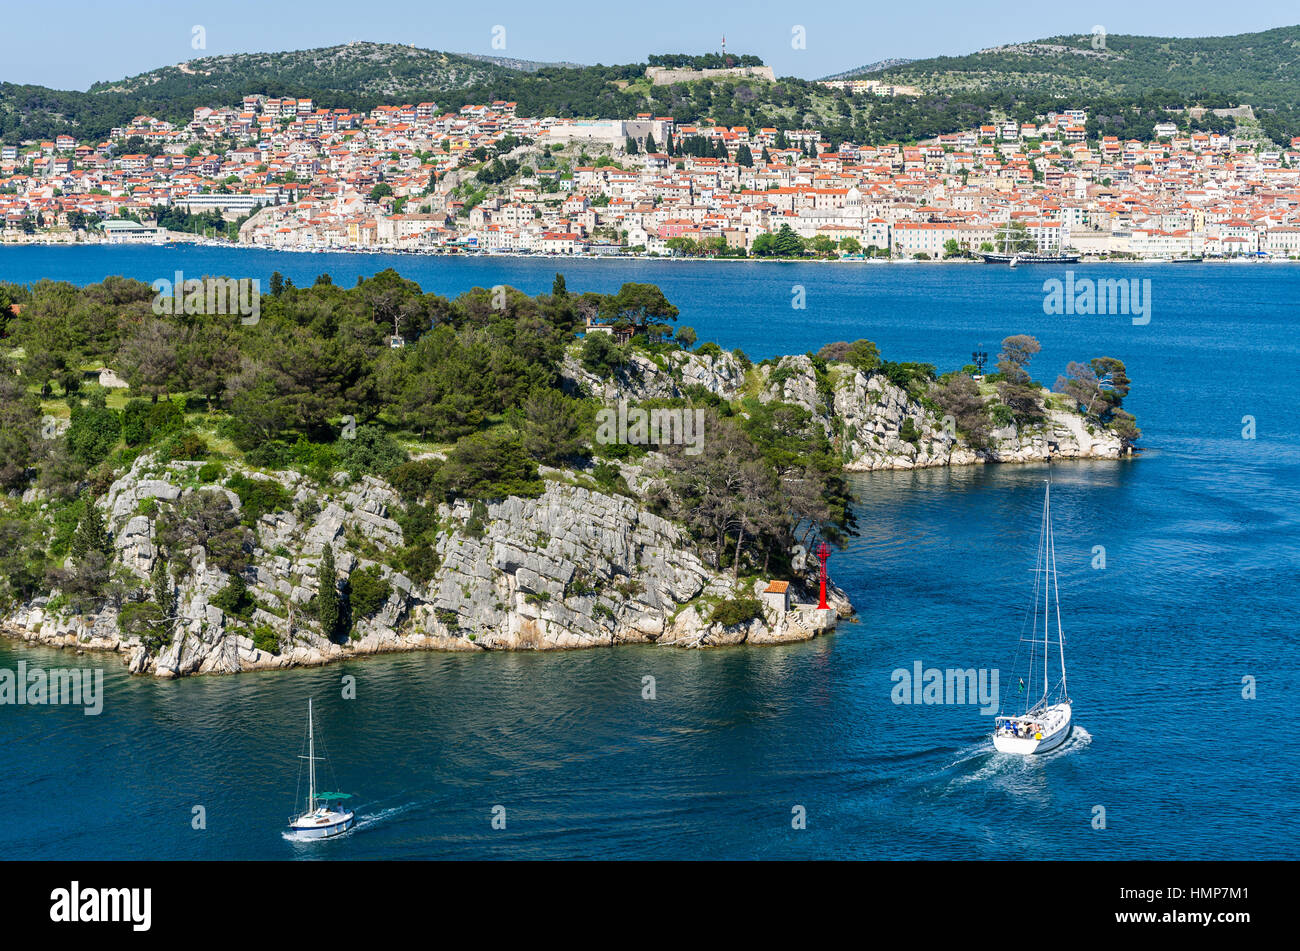 City of Sibenik, Adriatic coast, Croatia Stock Photo